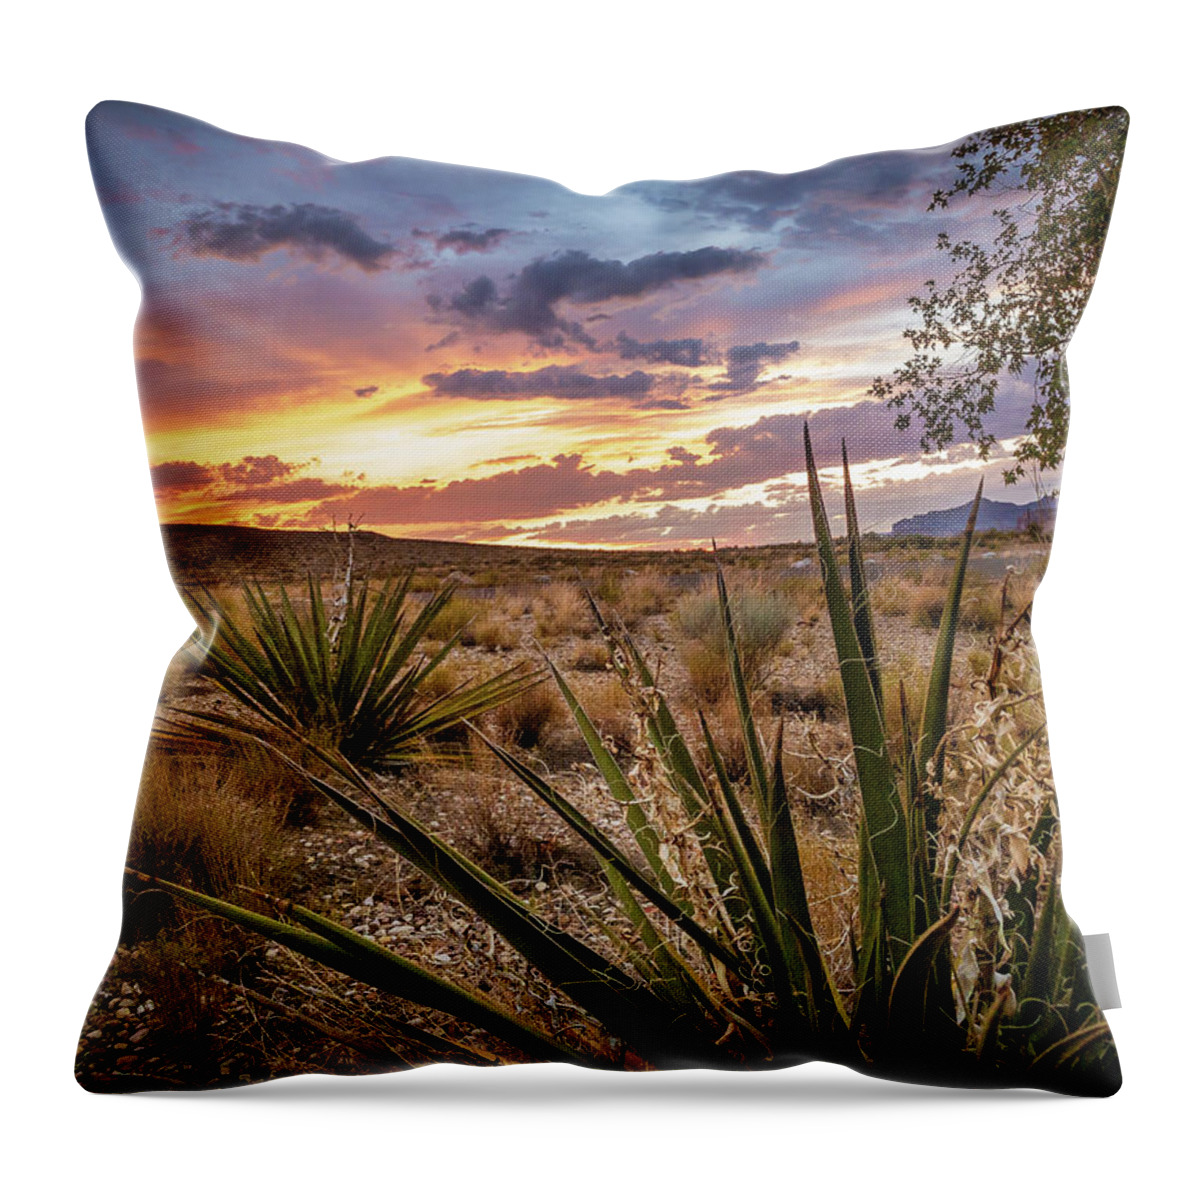 Lake Powell Throw Pillow featuring the photograph Arizona Desert Sunset by Bradley Morris